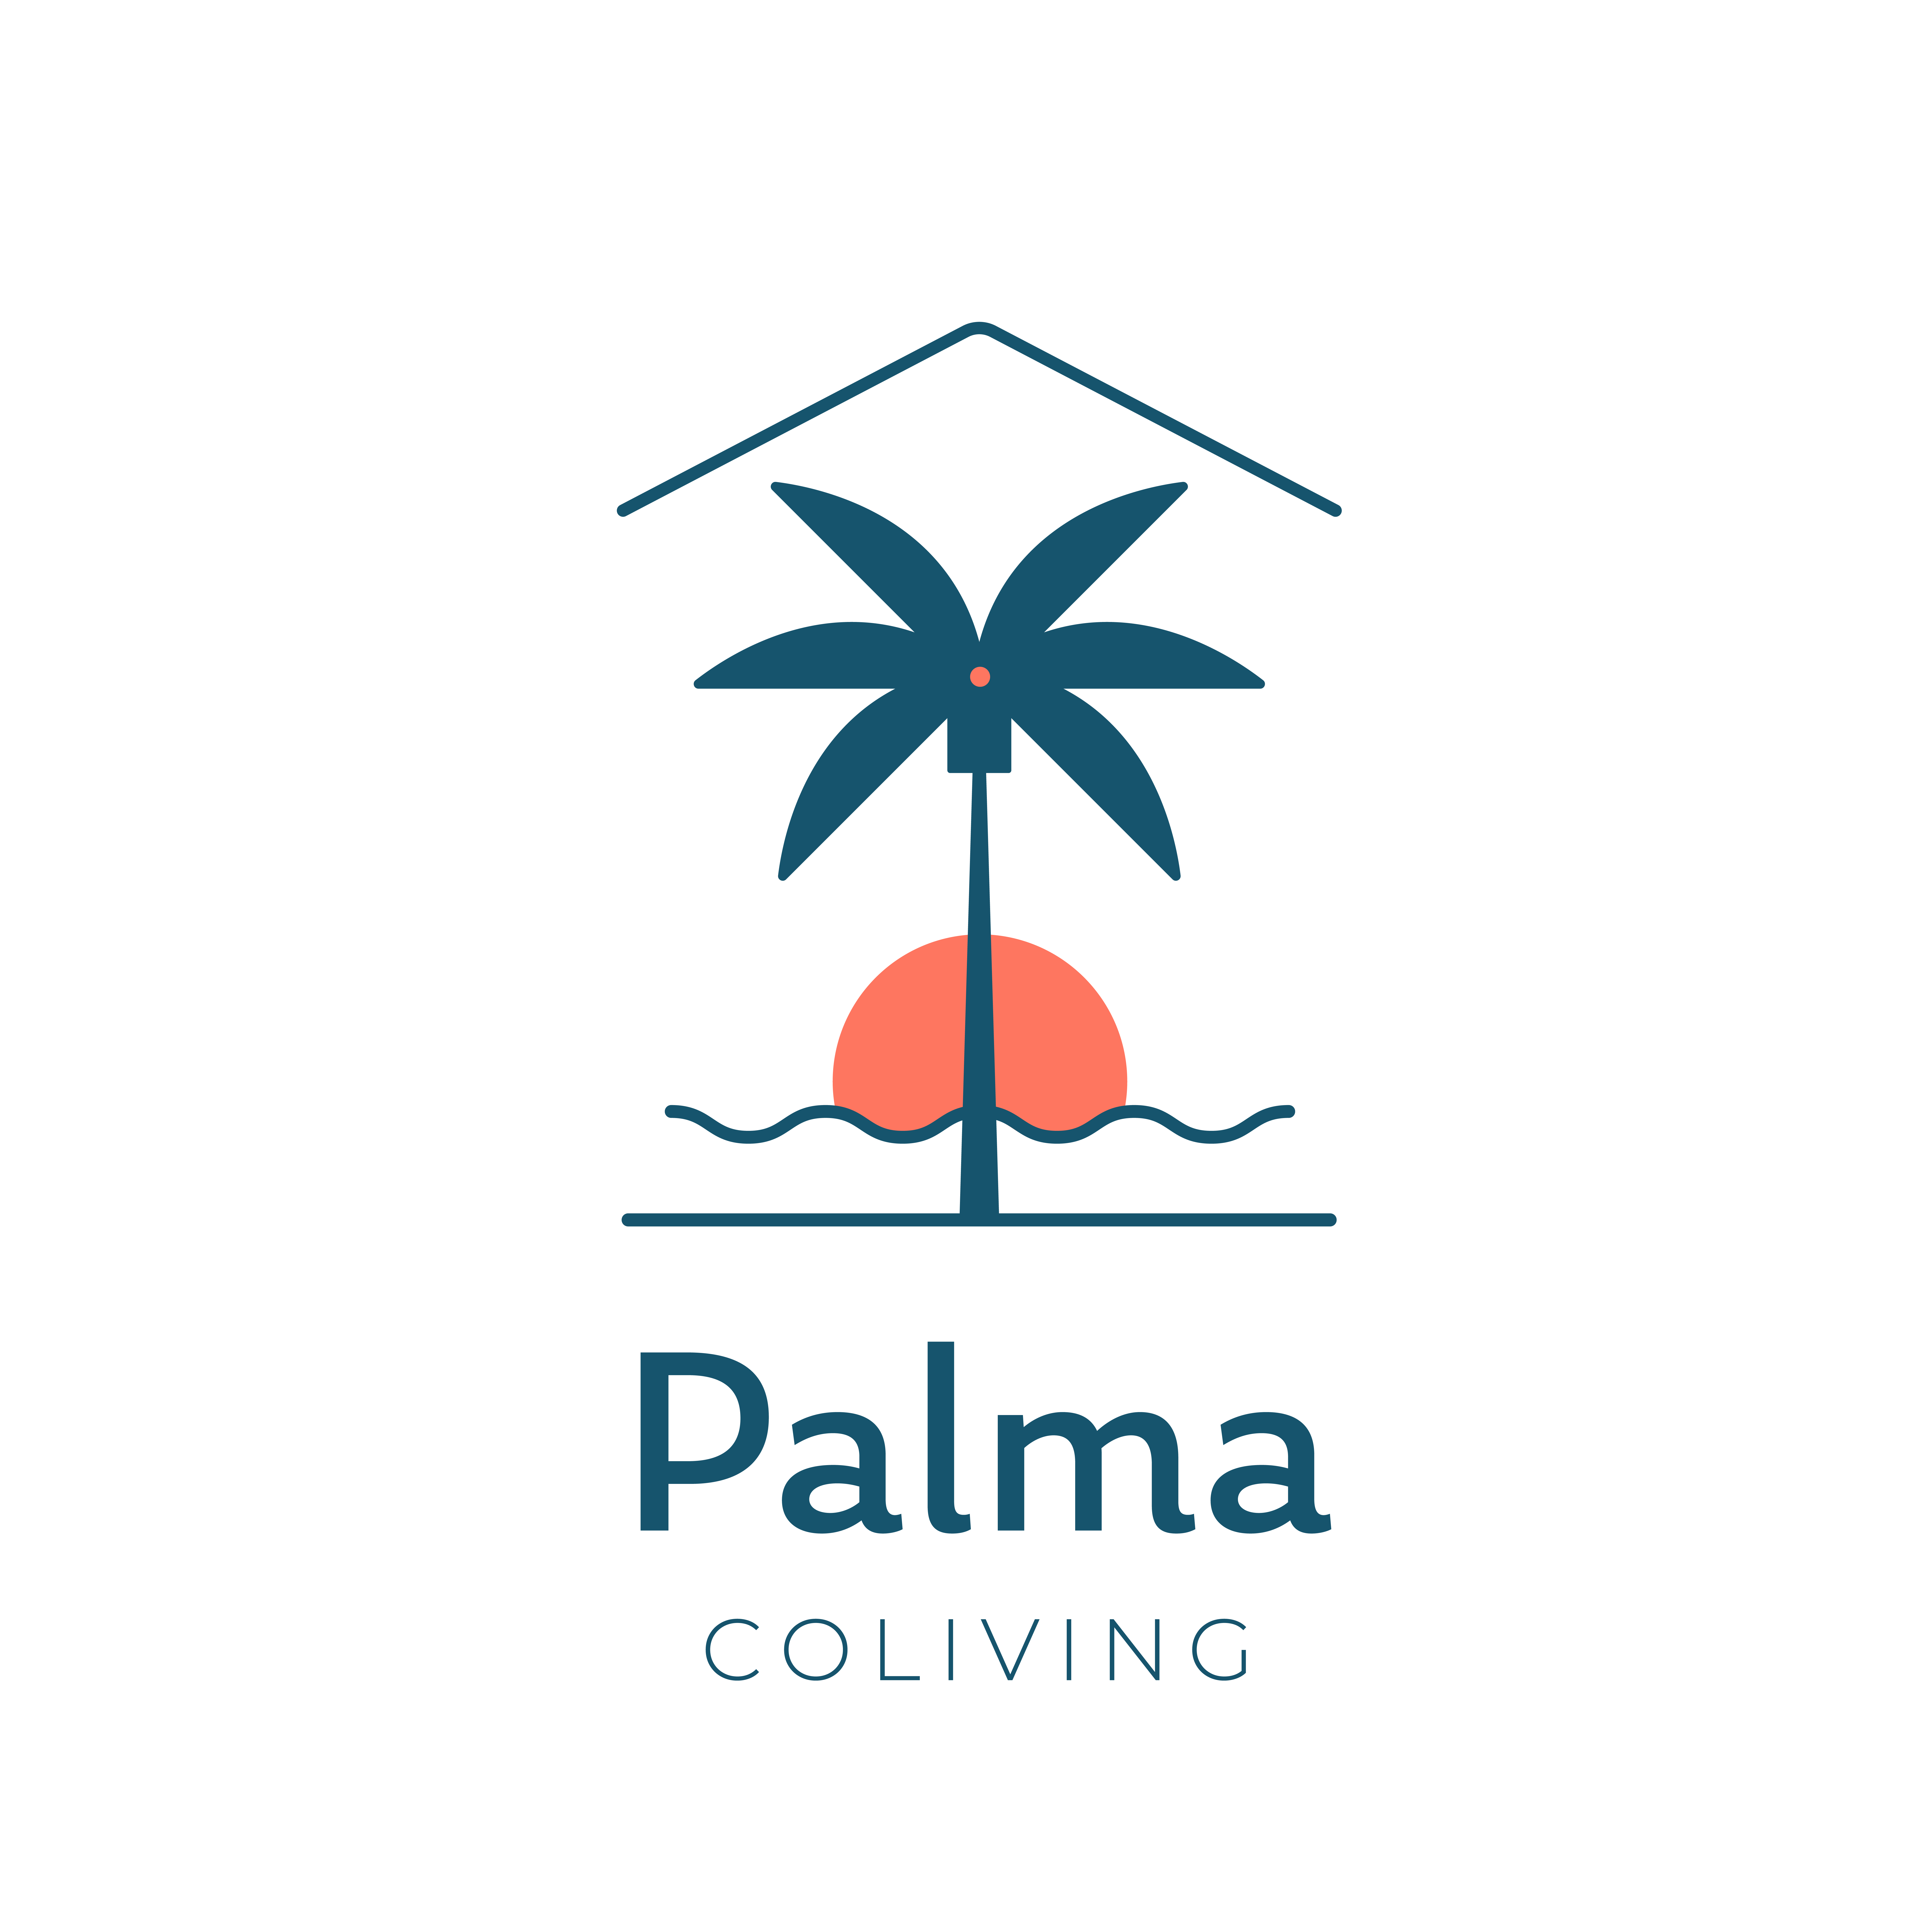 Palma Coliving